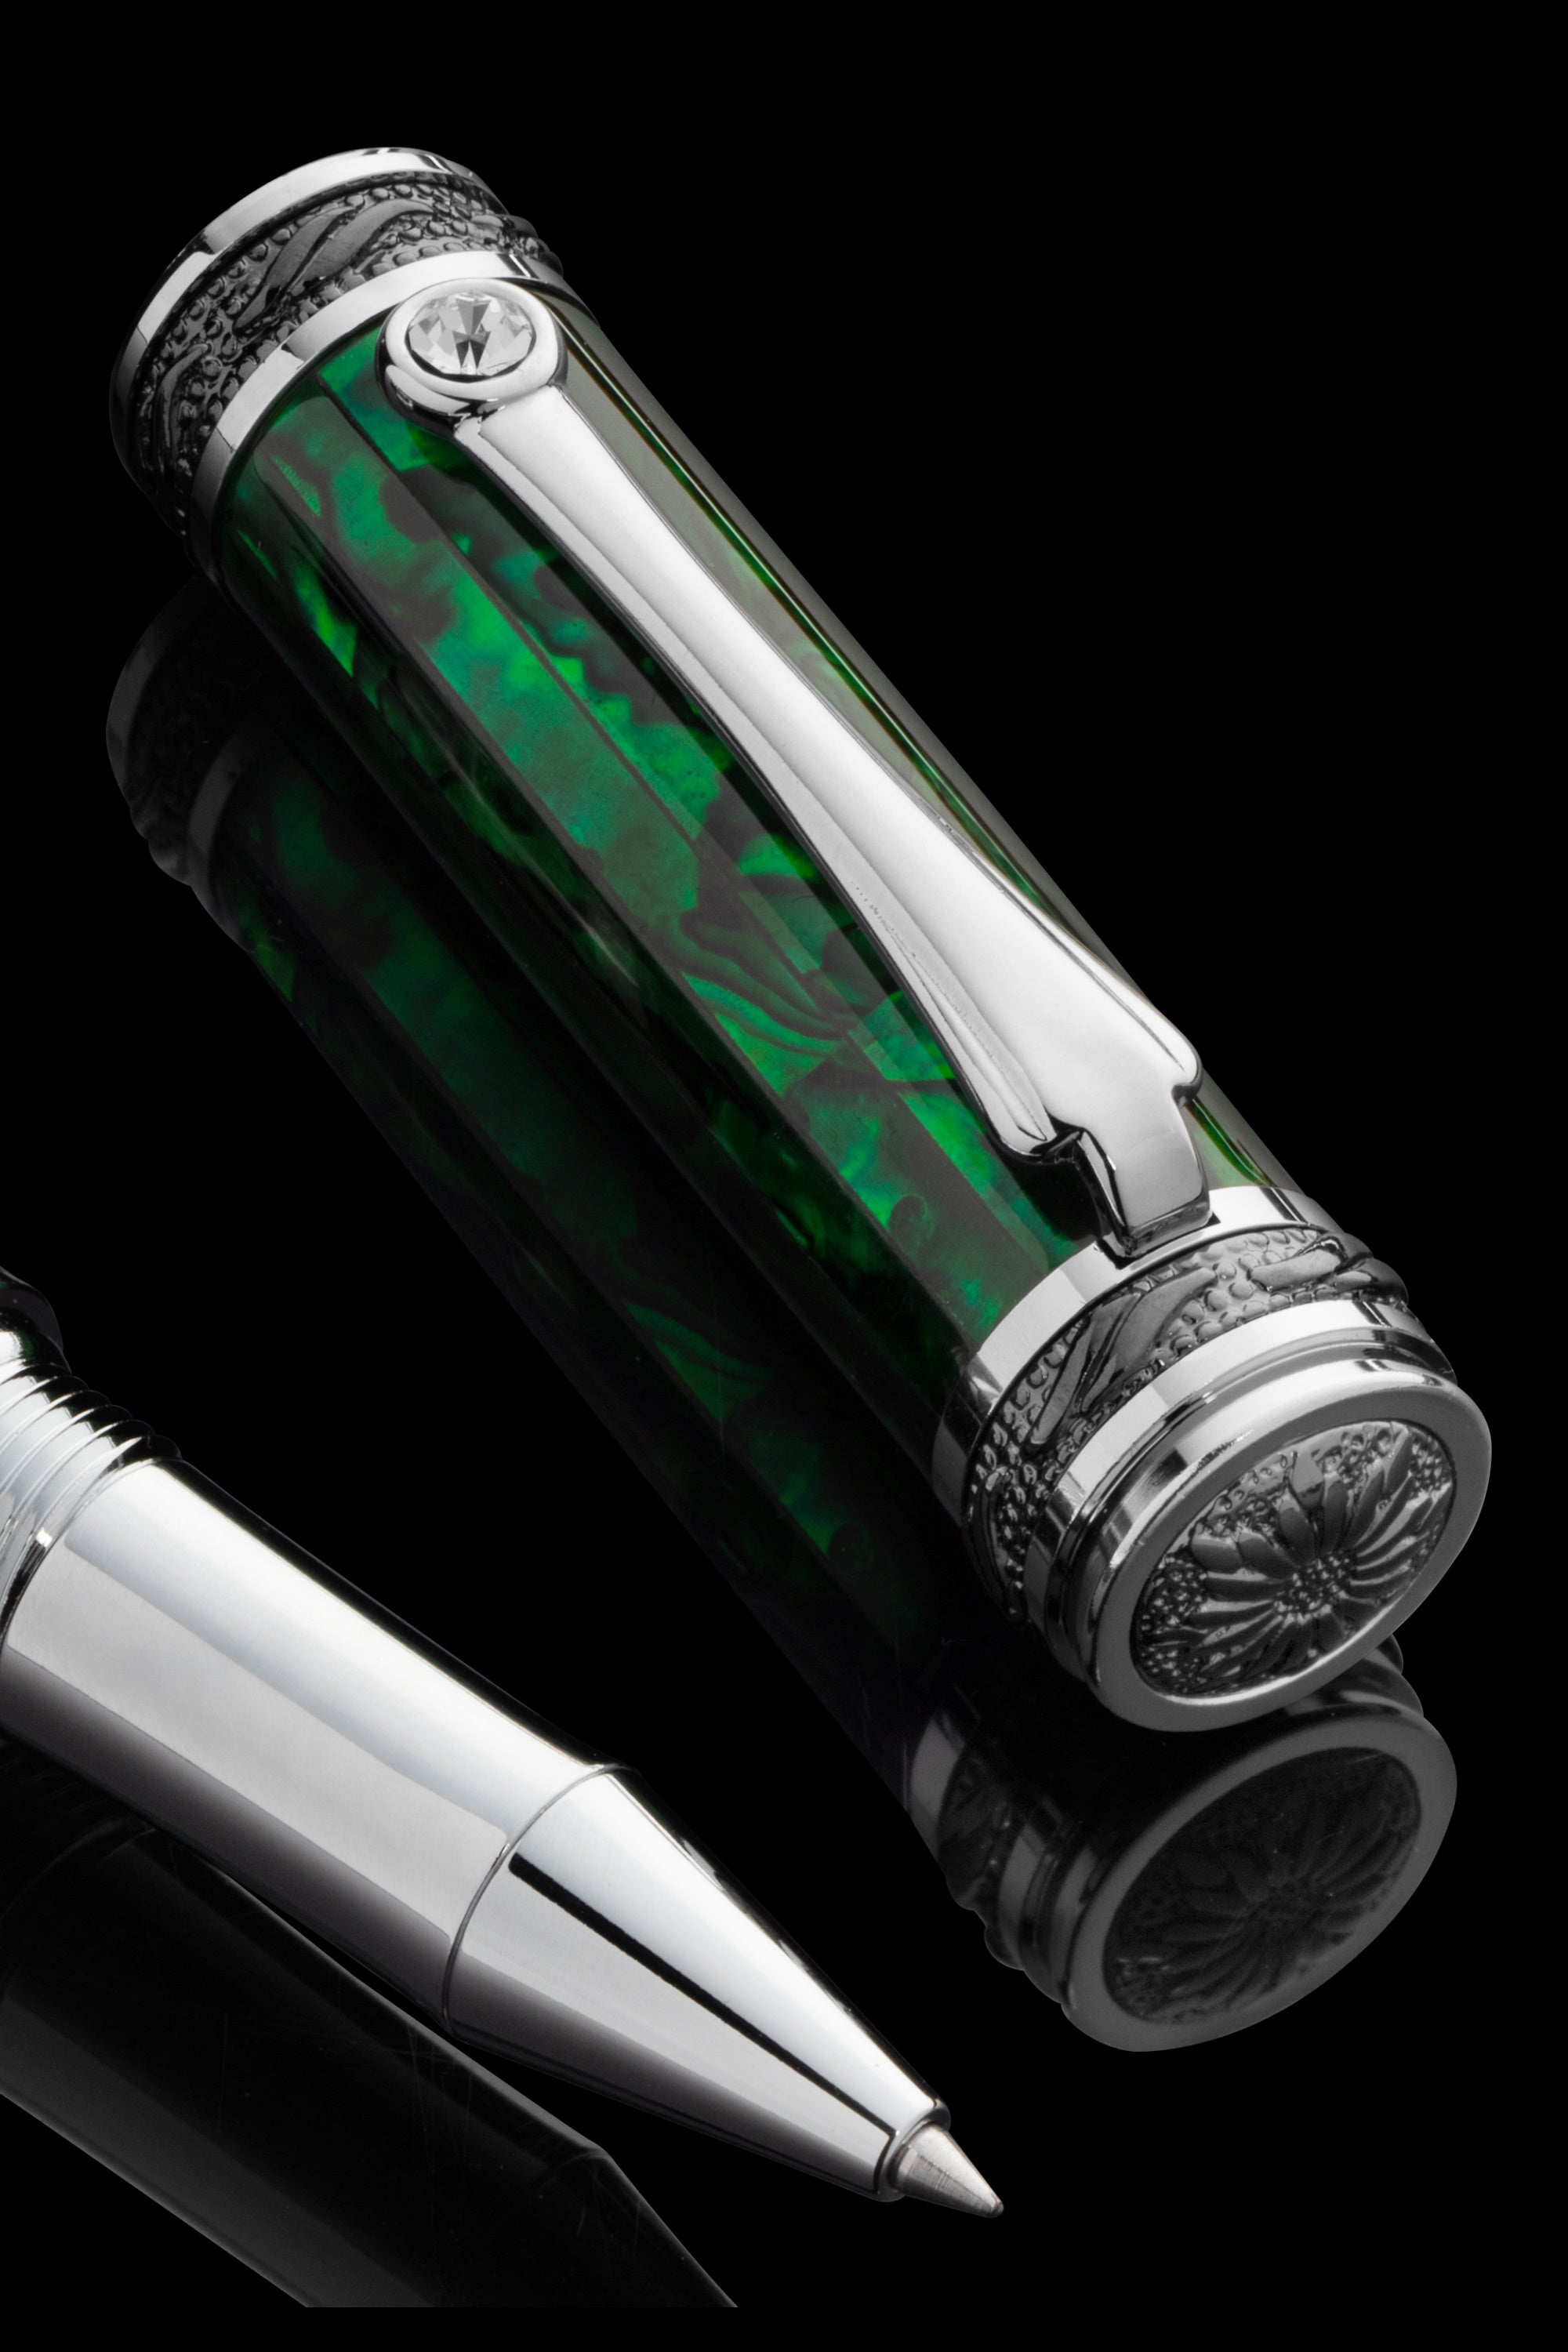 Tycoon Lustrous Emerald Rollerball Pen